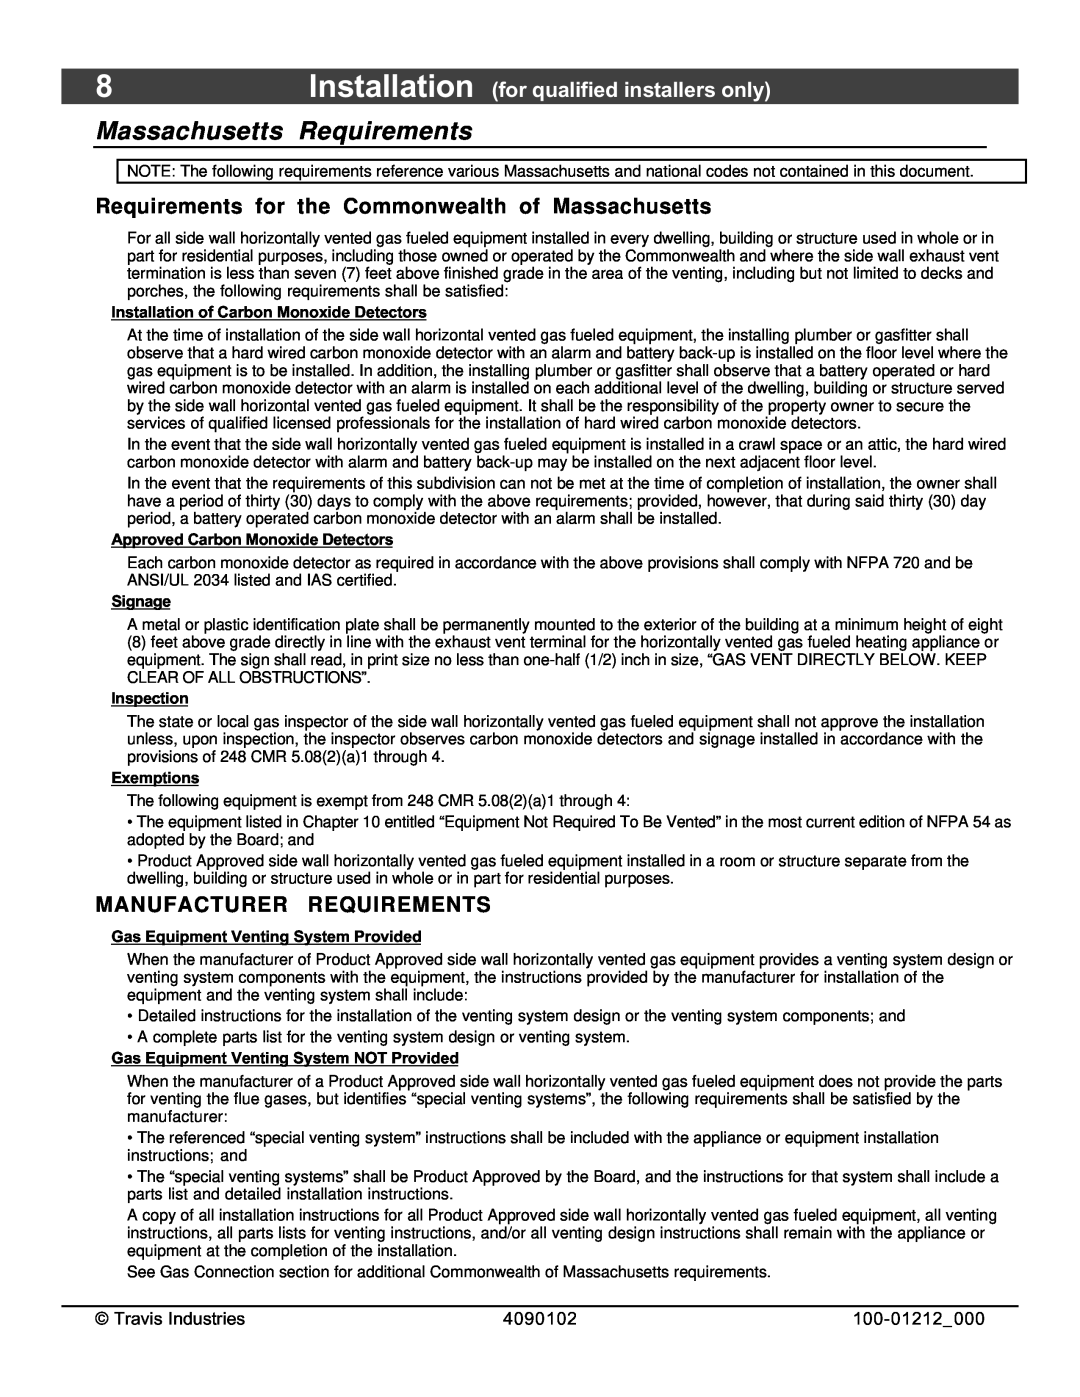 FireplaceXtrordinair 36CF Manufacturer Requirements, Massachusetts Requirements, Installation of Carbon Monoxide Detectors 